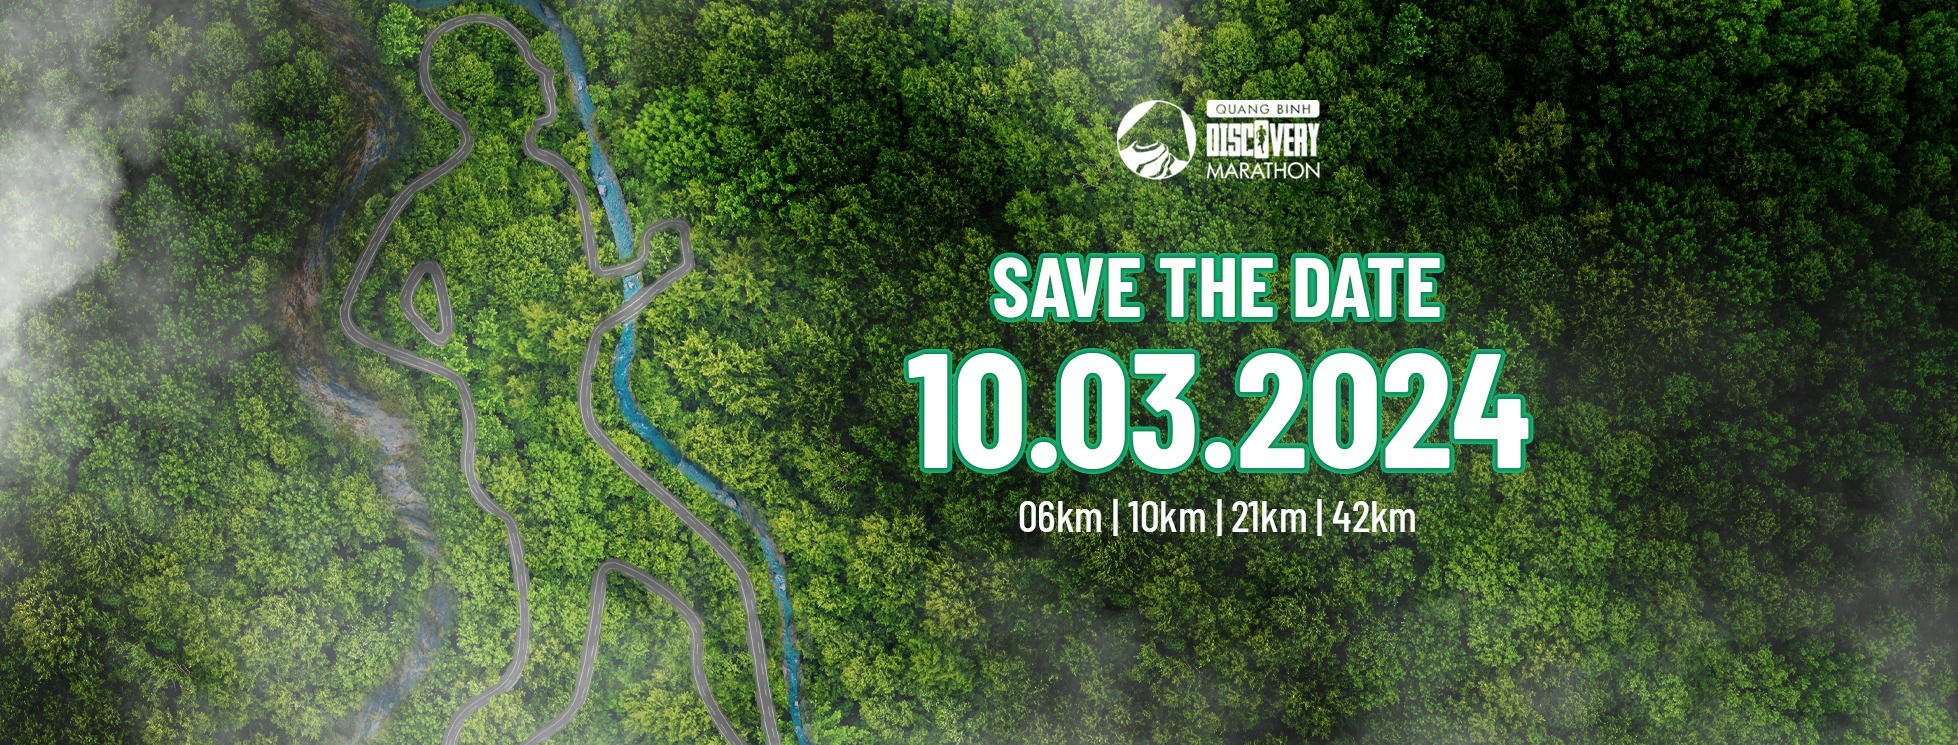 Quang Binh Discovery Marathon 2024 - quang binh discovery marathon 2024